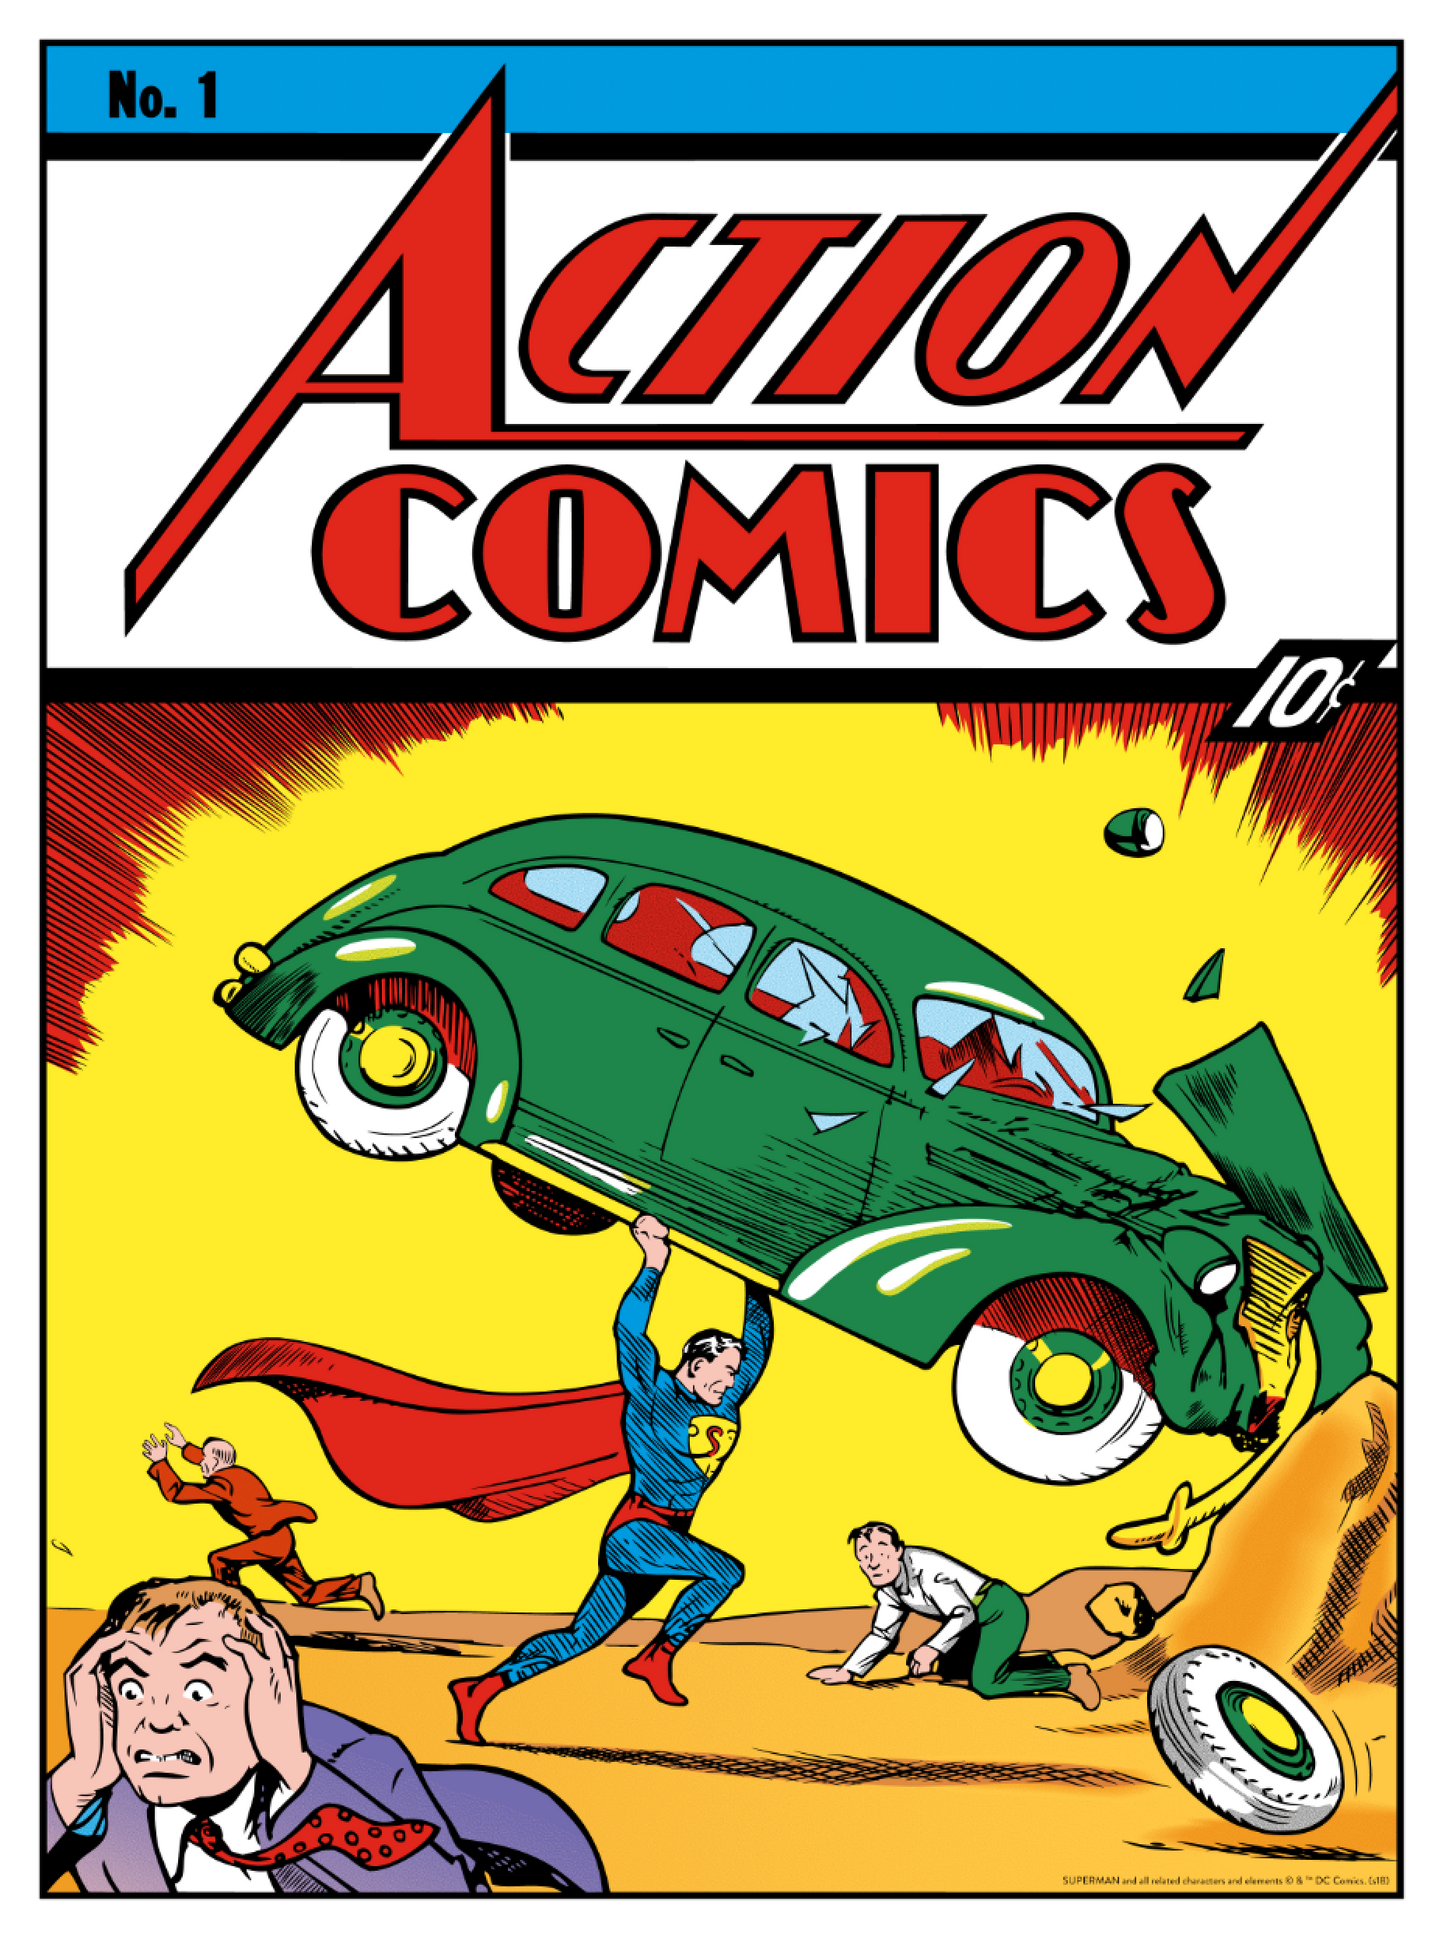 Superman: Action Comics No. 1 - 80th Anniversary Cover